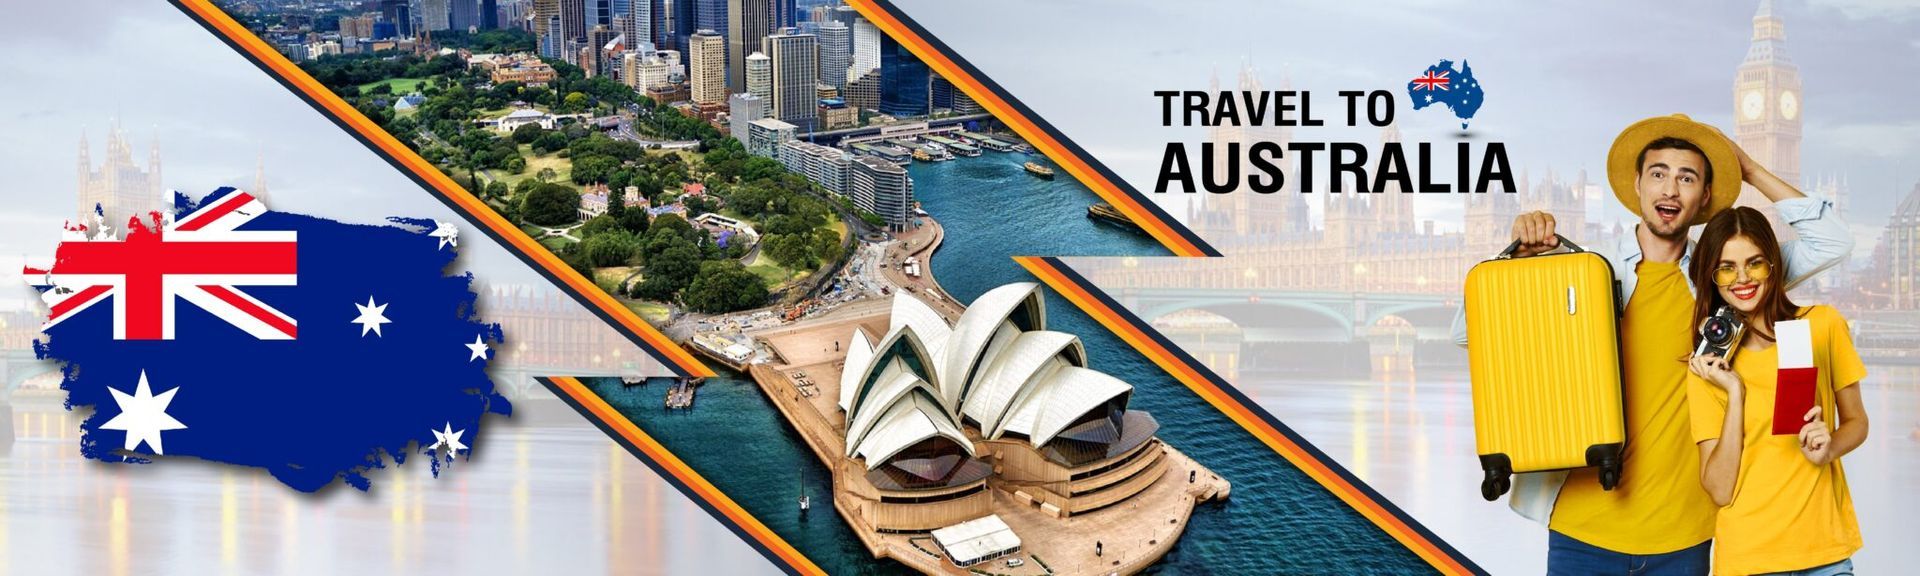 buy australian passport and easily travel to Australia